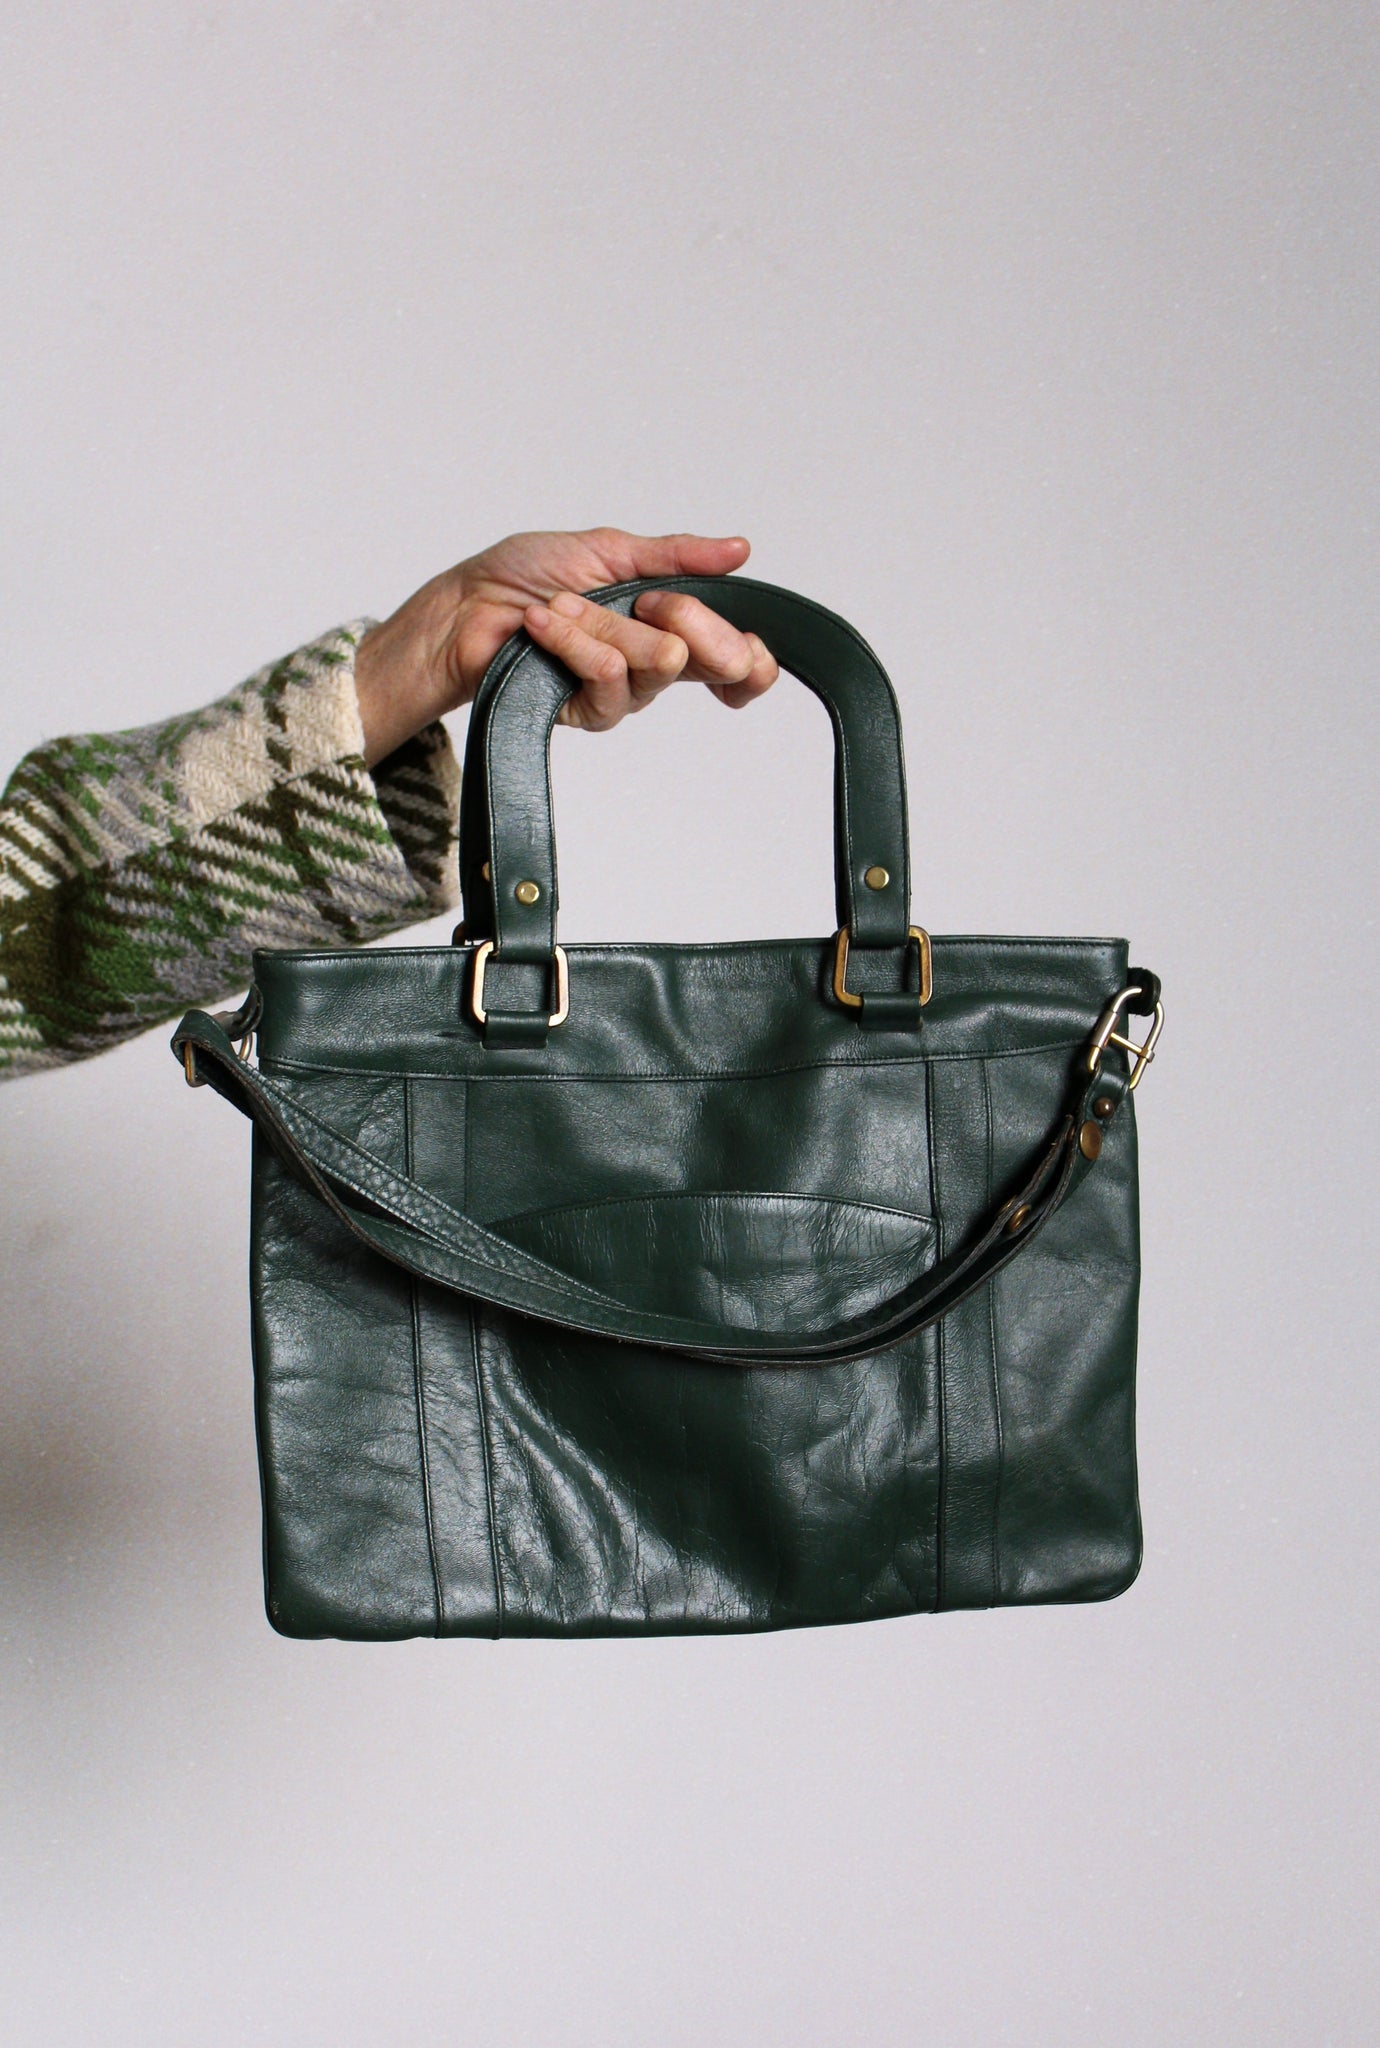 Kigai Dark Green Shoulder Bag for Women,Fashion Chain Strap Handbag Purse  with Zipper Closure : Clothing, Shoes & Jewelry - Amazon.com